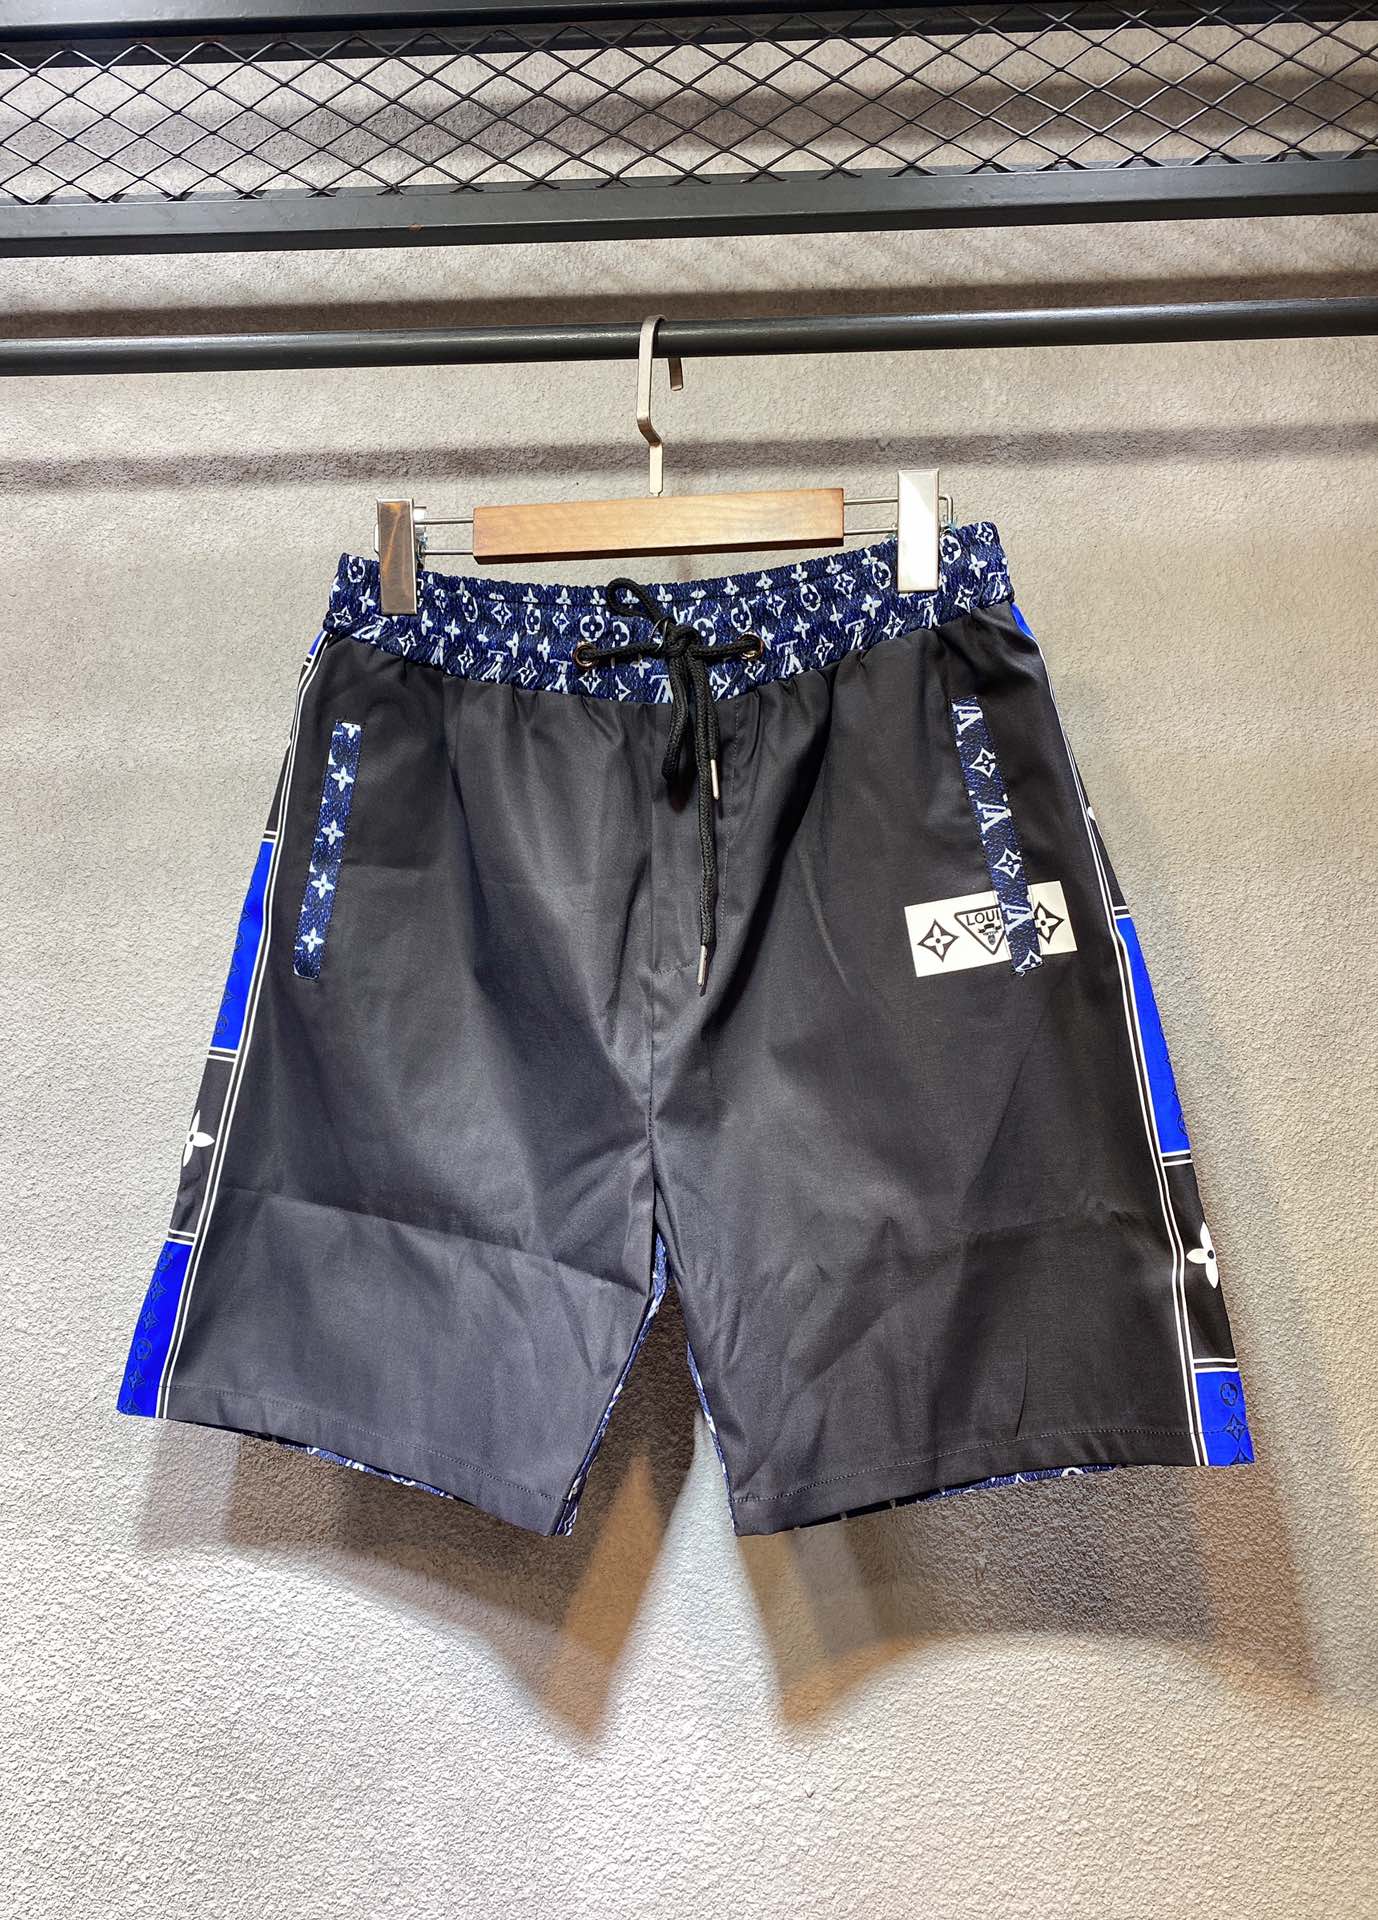 Louis Vuitton Clothing Shorts Printing Men Summer Collection Beach